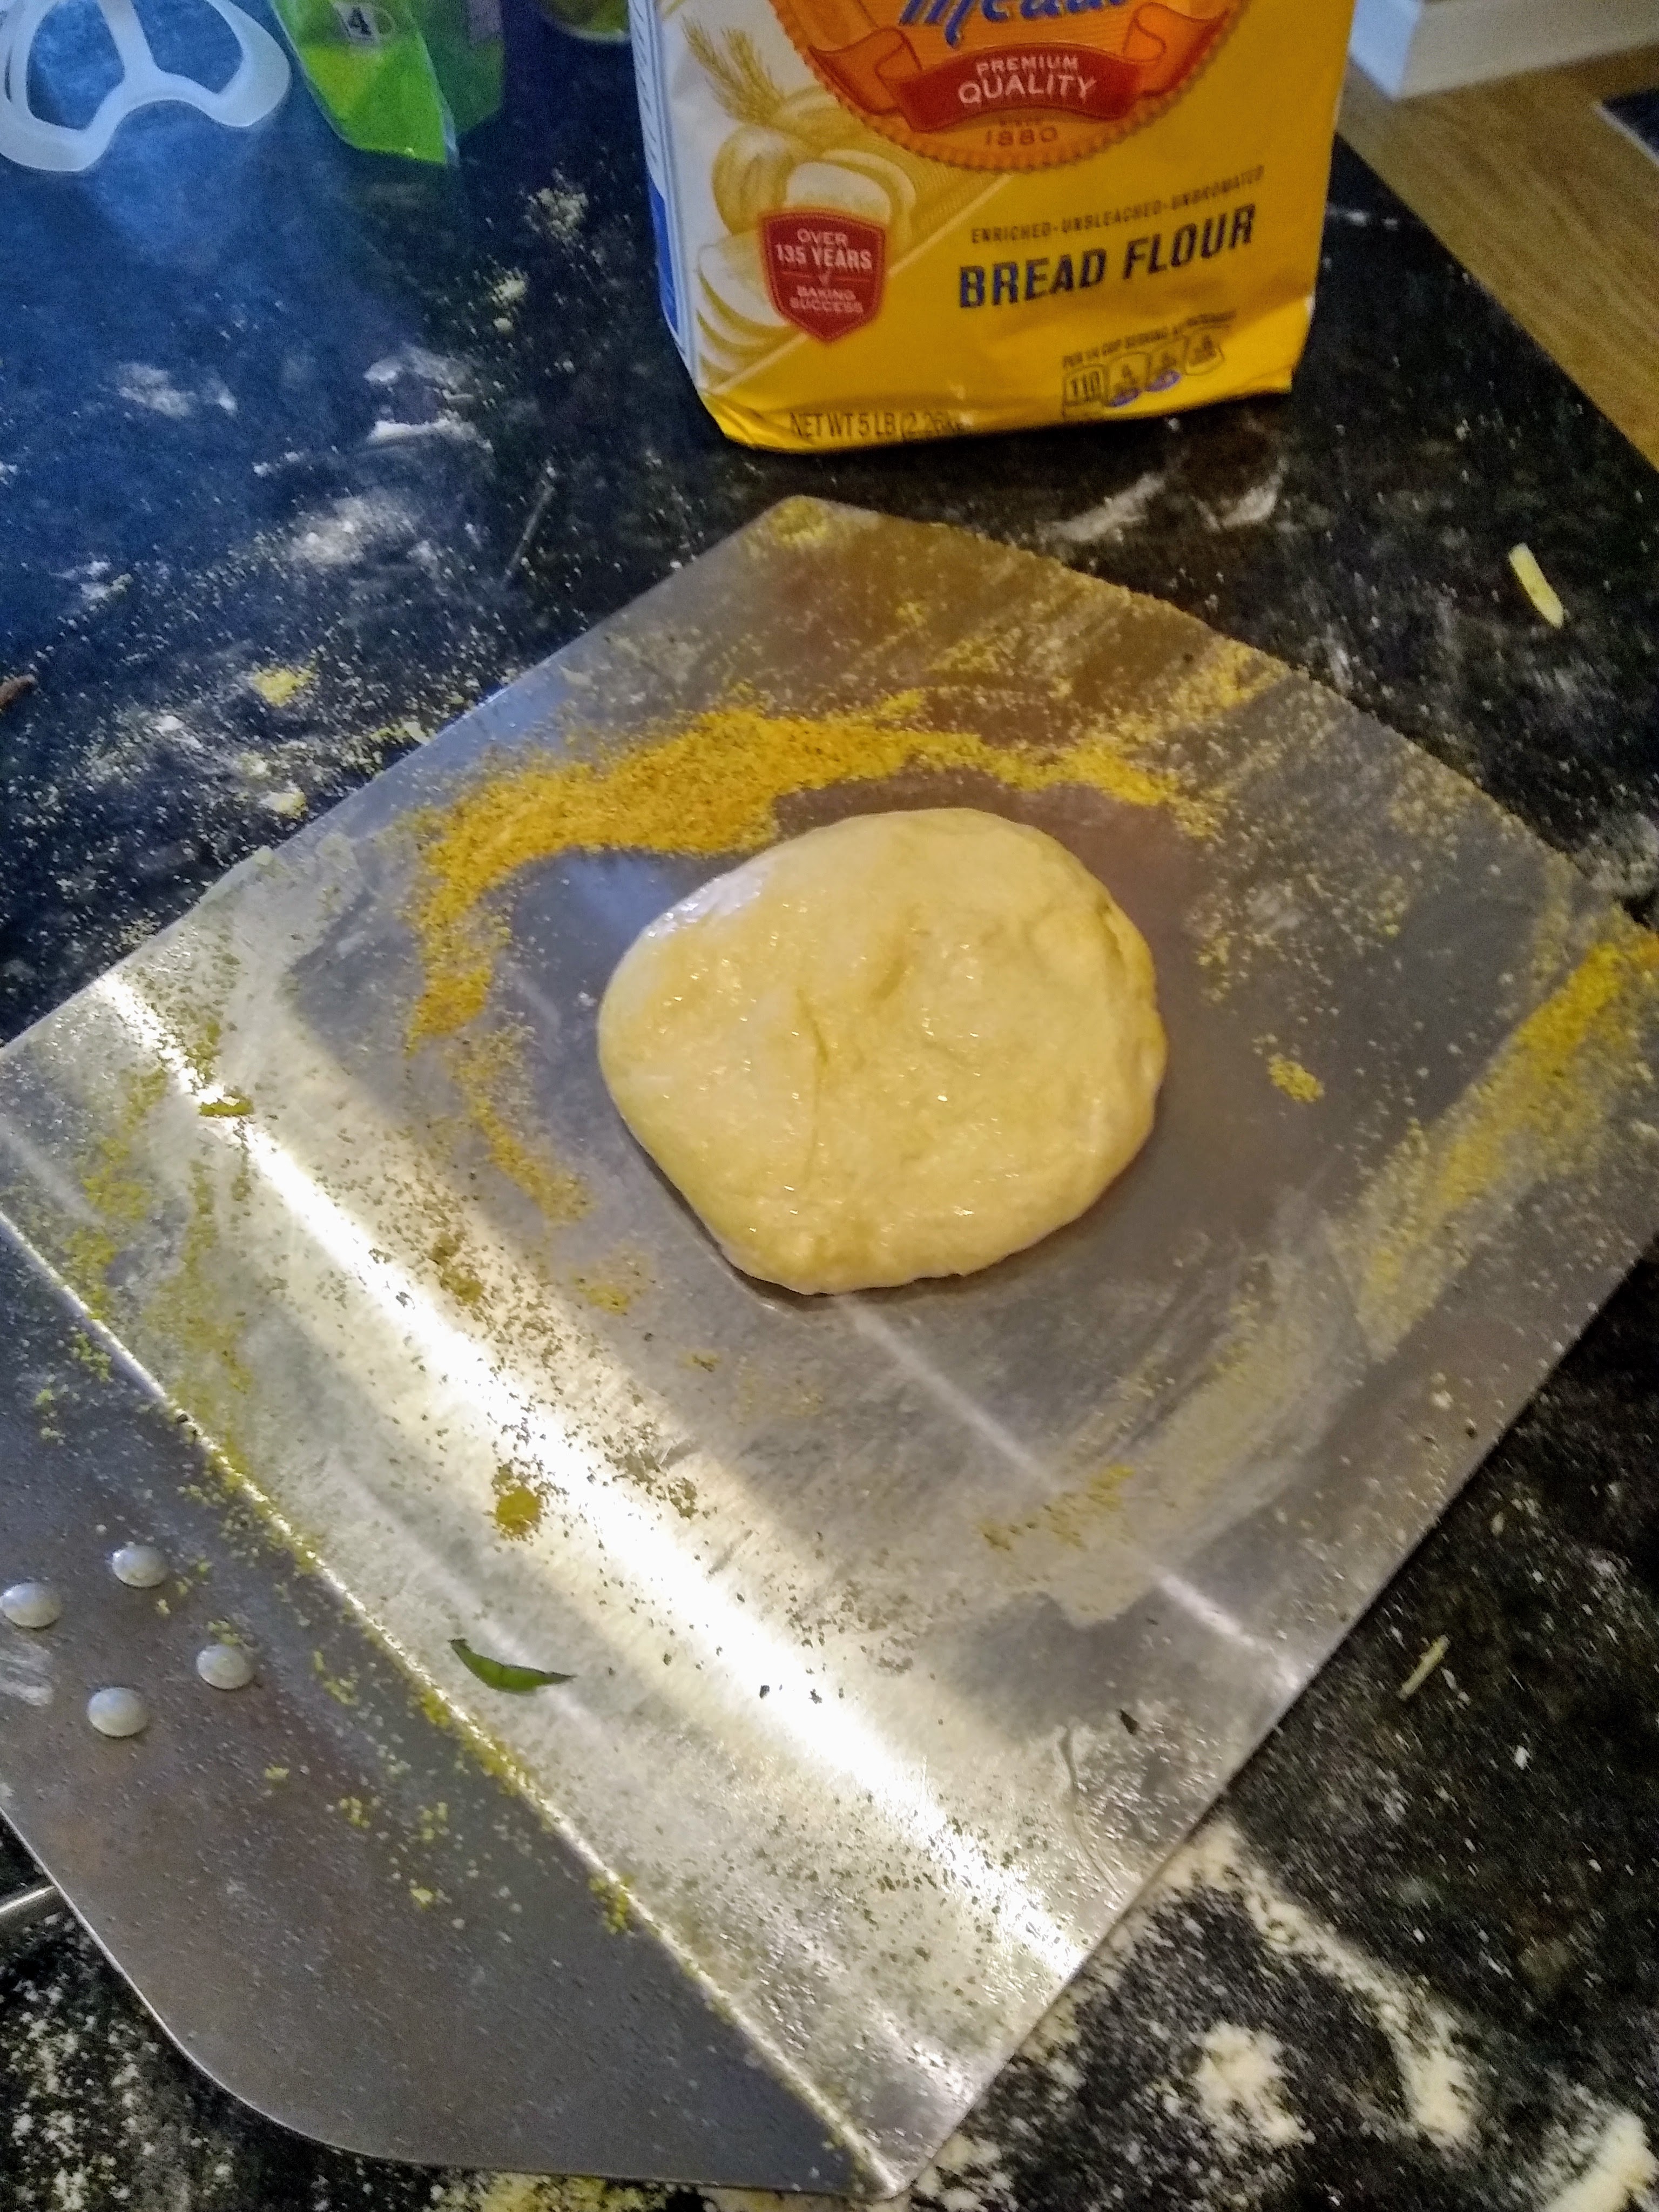 Ball of dough, pre-shaping